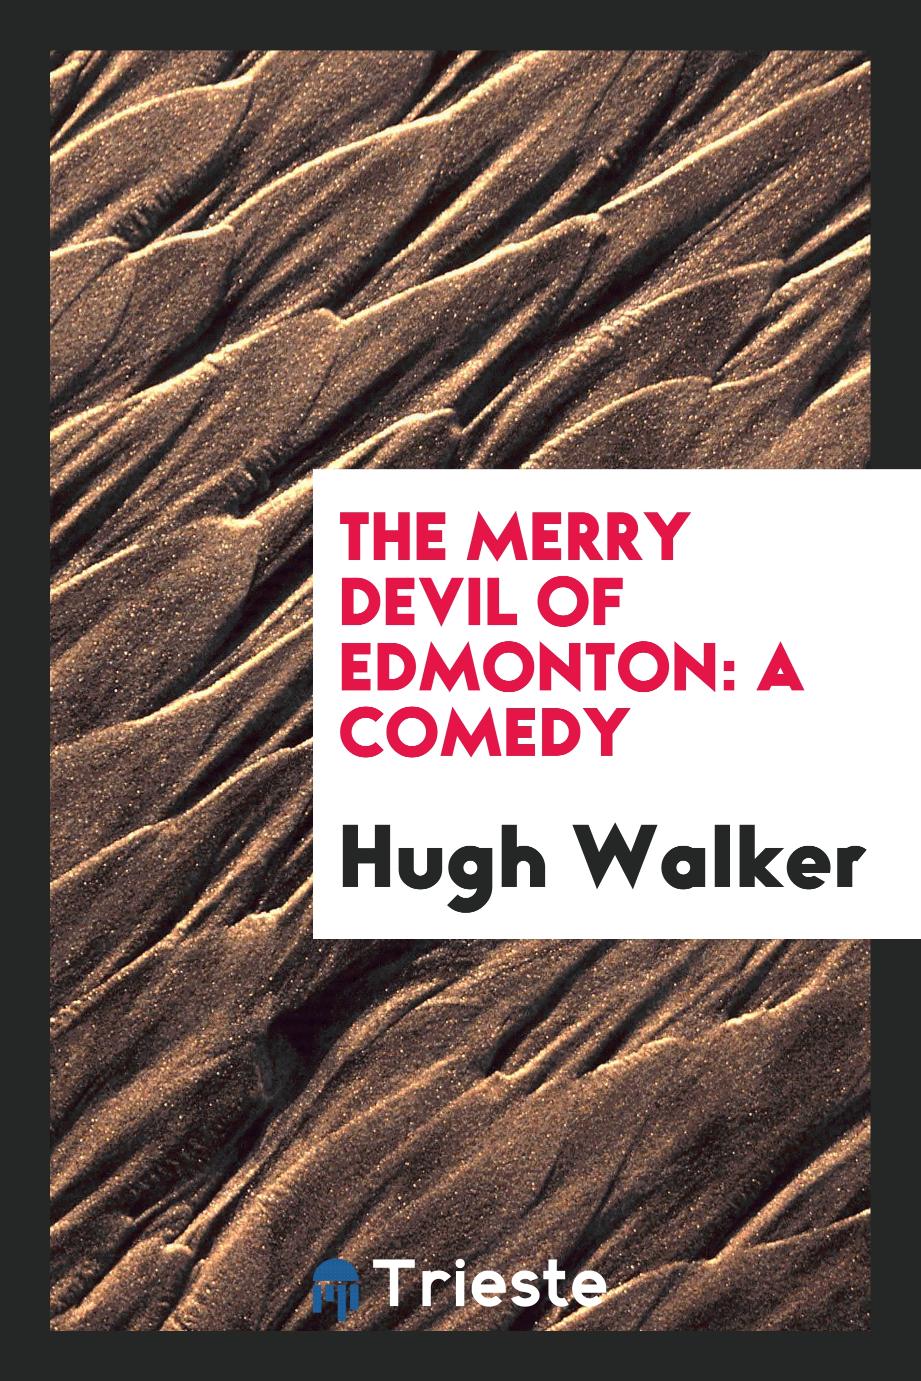 Hugh Walker - The merry devil of Edmonton: A comedy